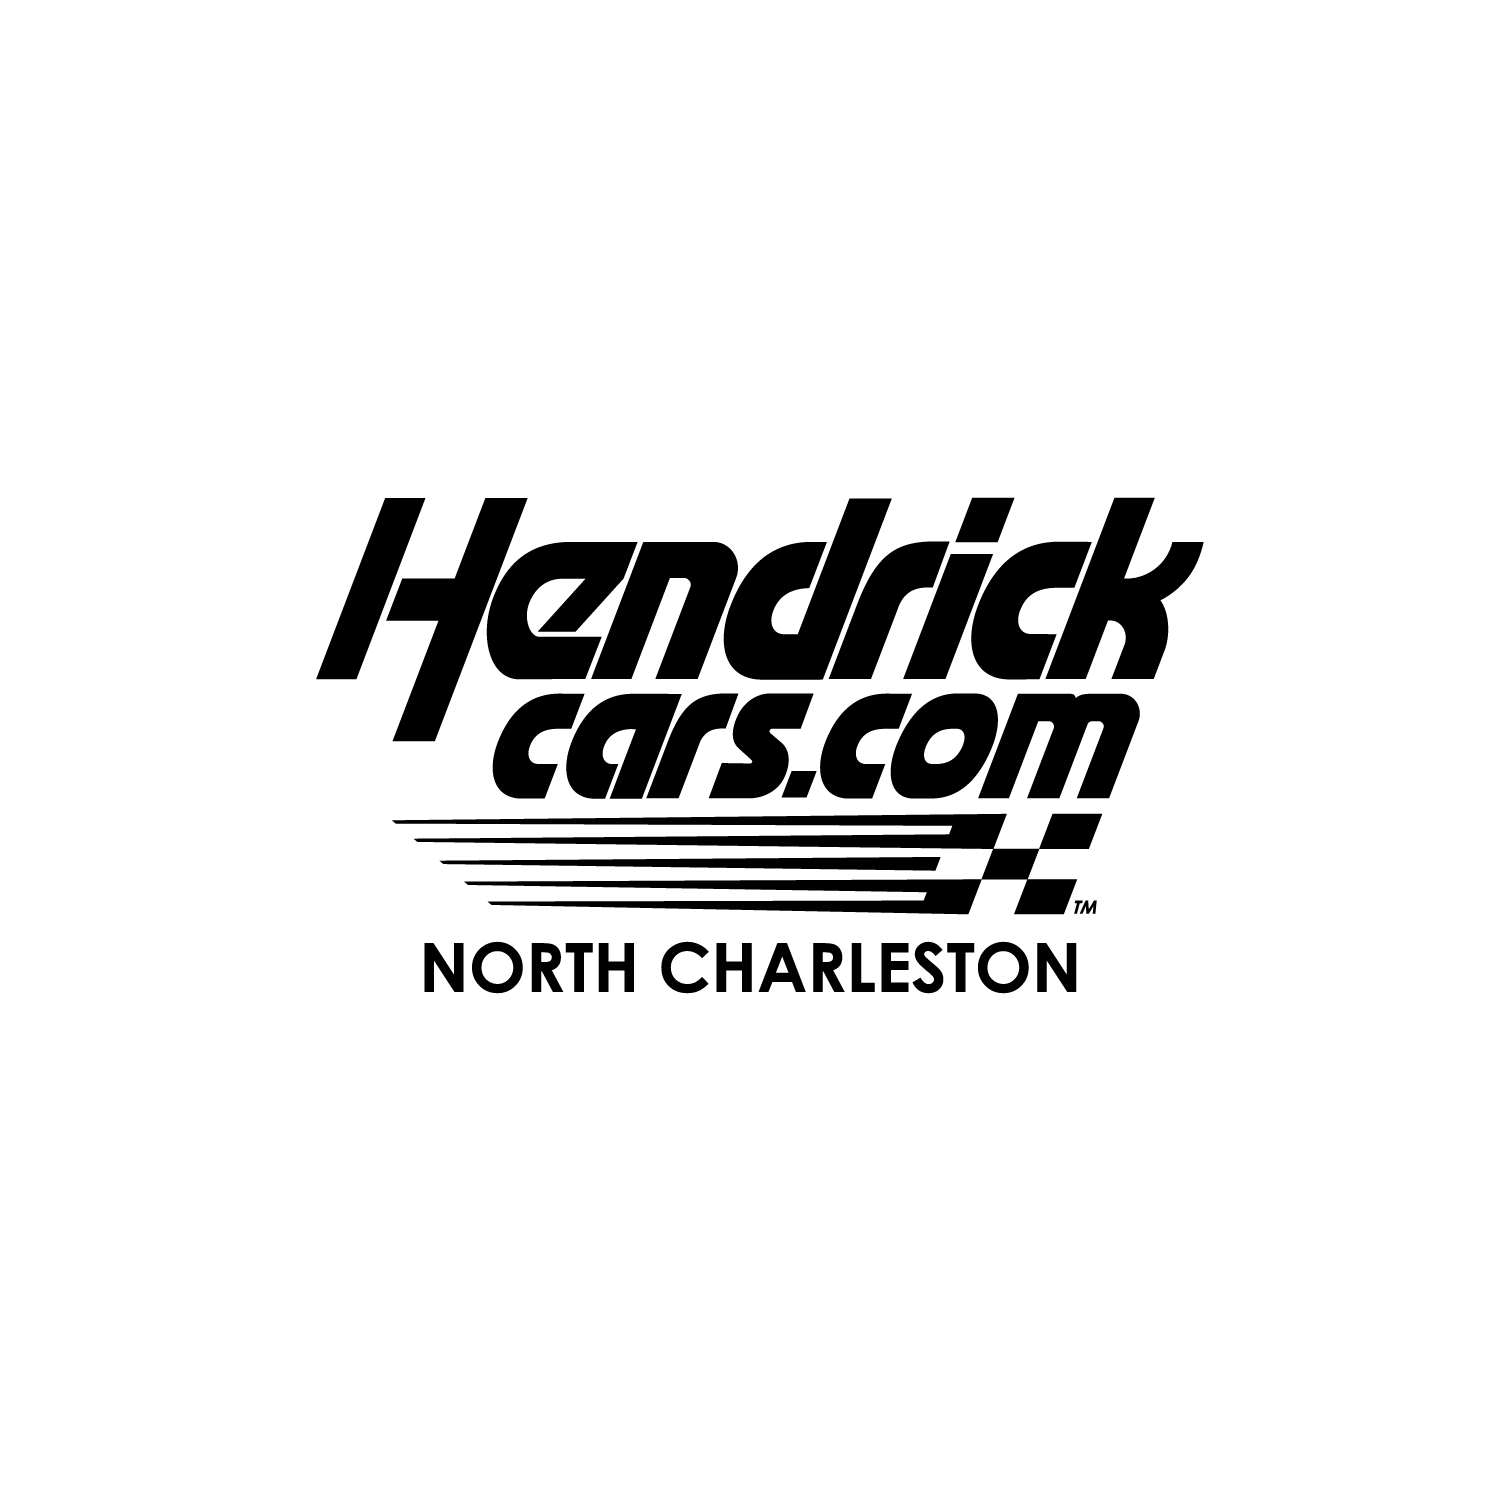 Hendrickcars.com North Charleston Logo